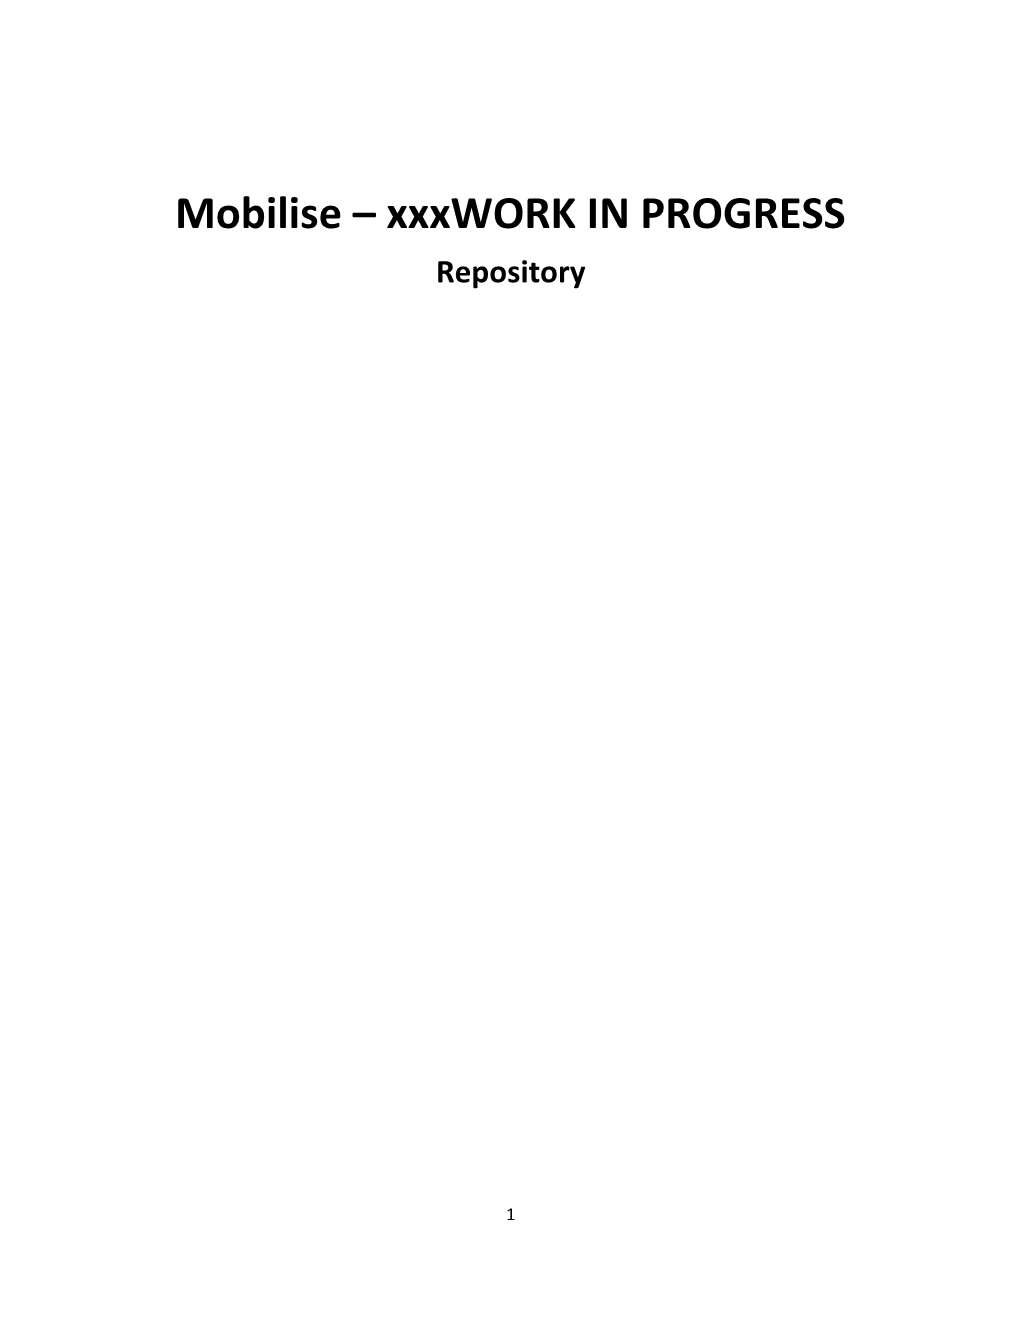 Mobilise Xxxwork in PROGRESS